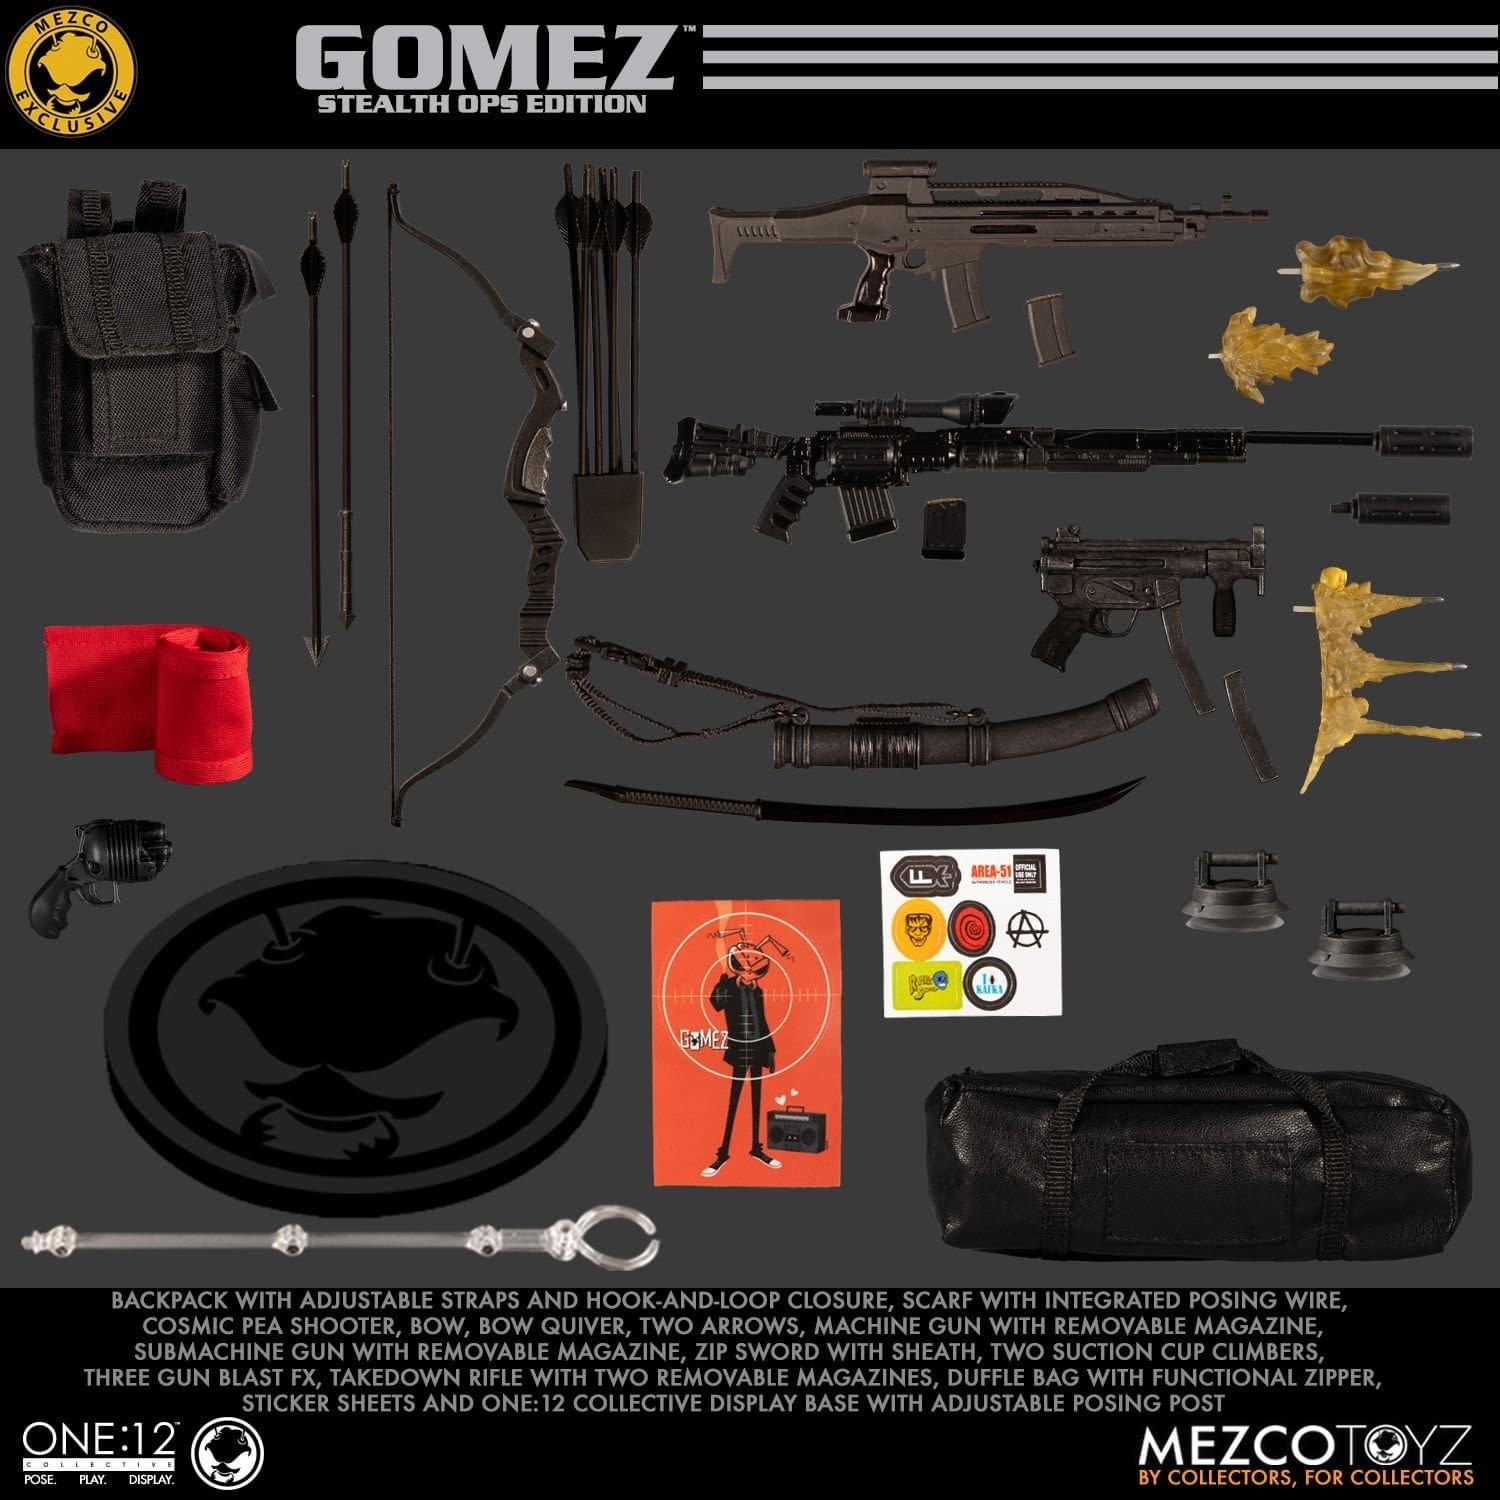 My New Collecting Obsession: Mezco Toyz Gomez